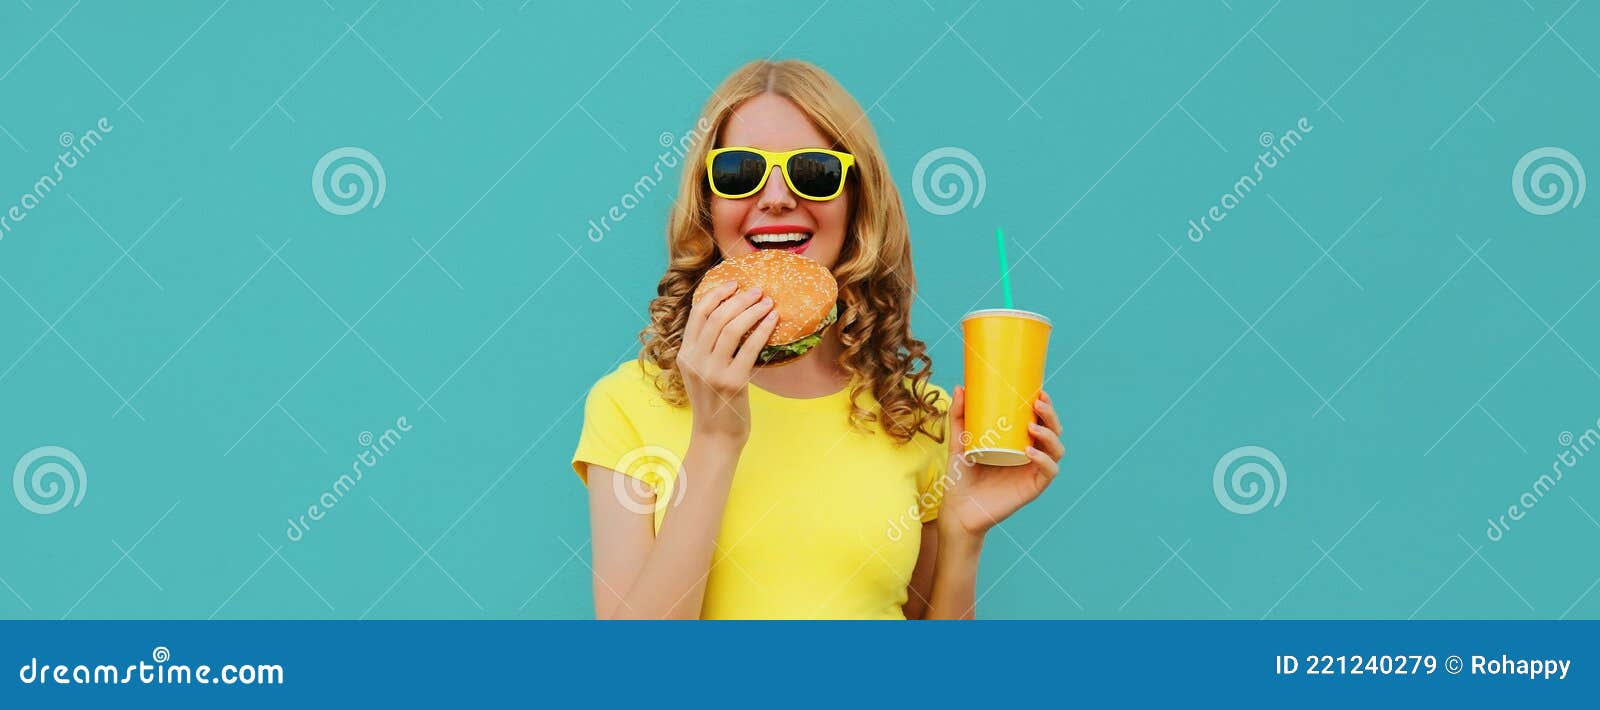 1,941 Fat Woman Sunglasses Stock Photos - Free & Royalty-Free